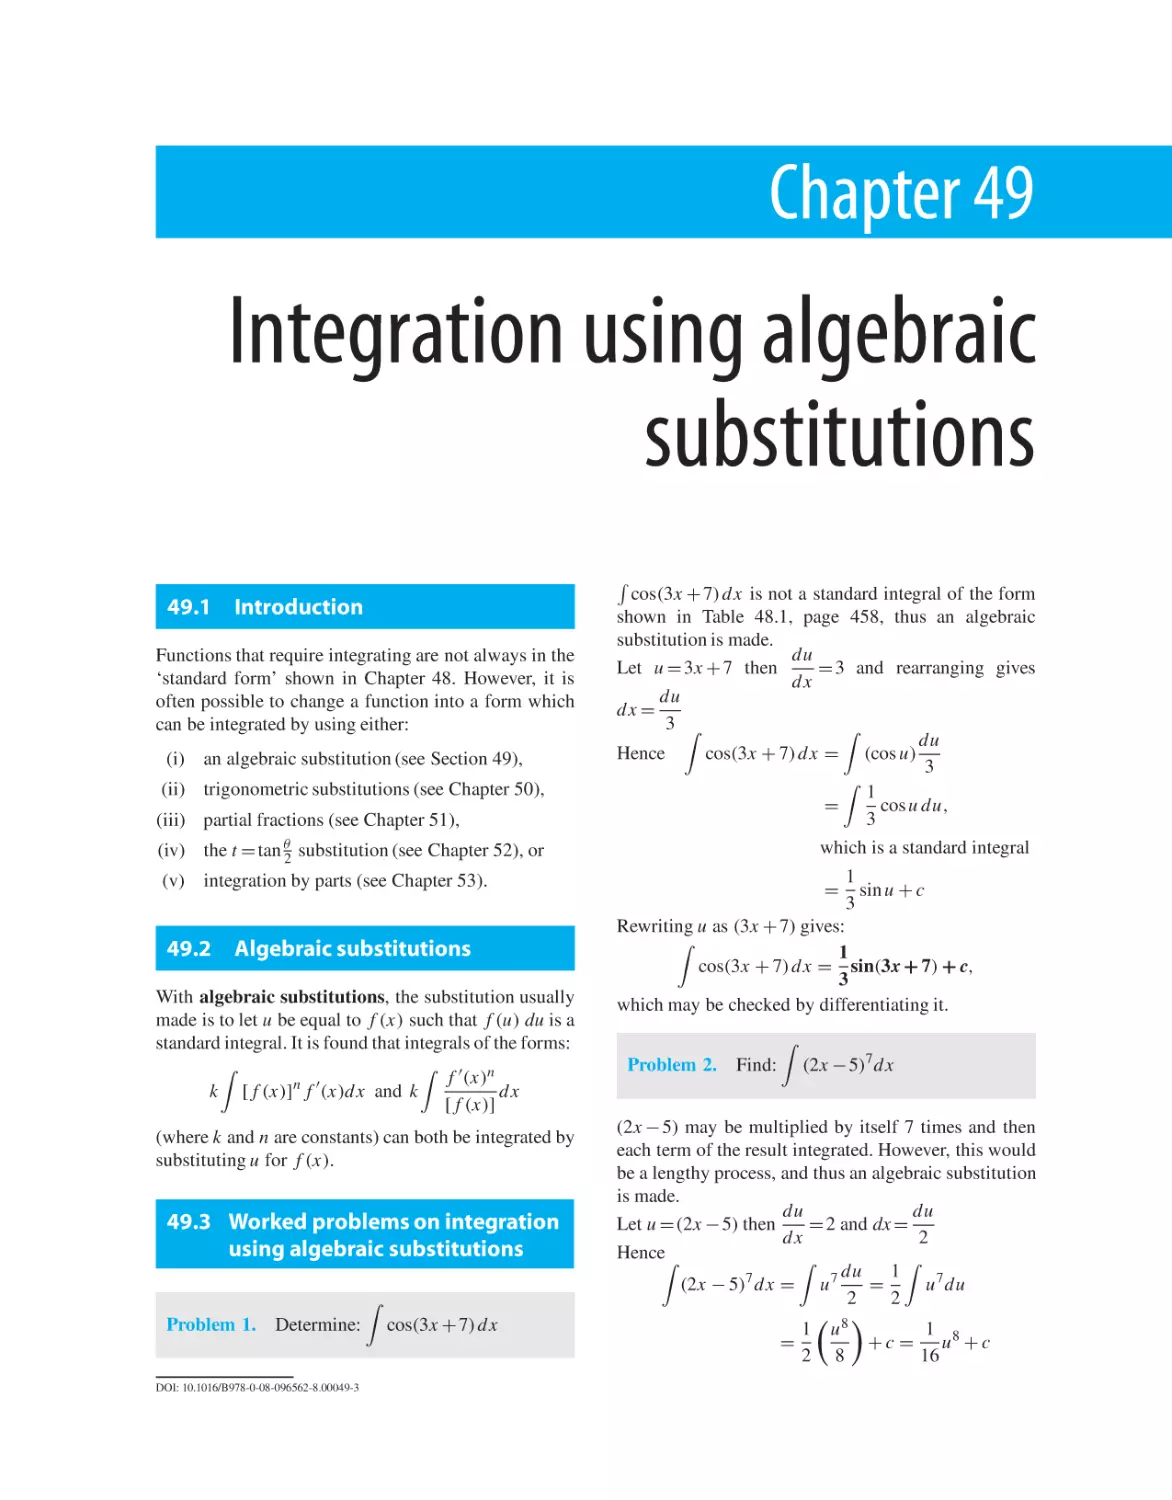 Chapter 49. Integration using algebraic substitutions
49.1 Introduction
49.2 Algebraic substitutions
49.3 Worked problems on integration using algebraic substitutions